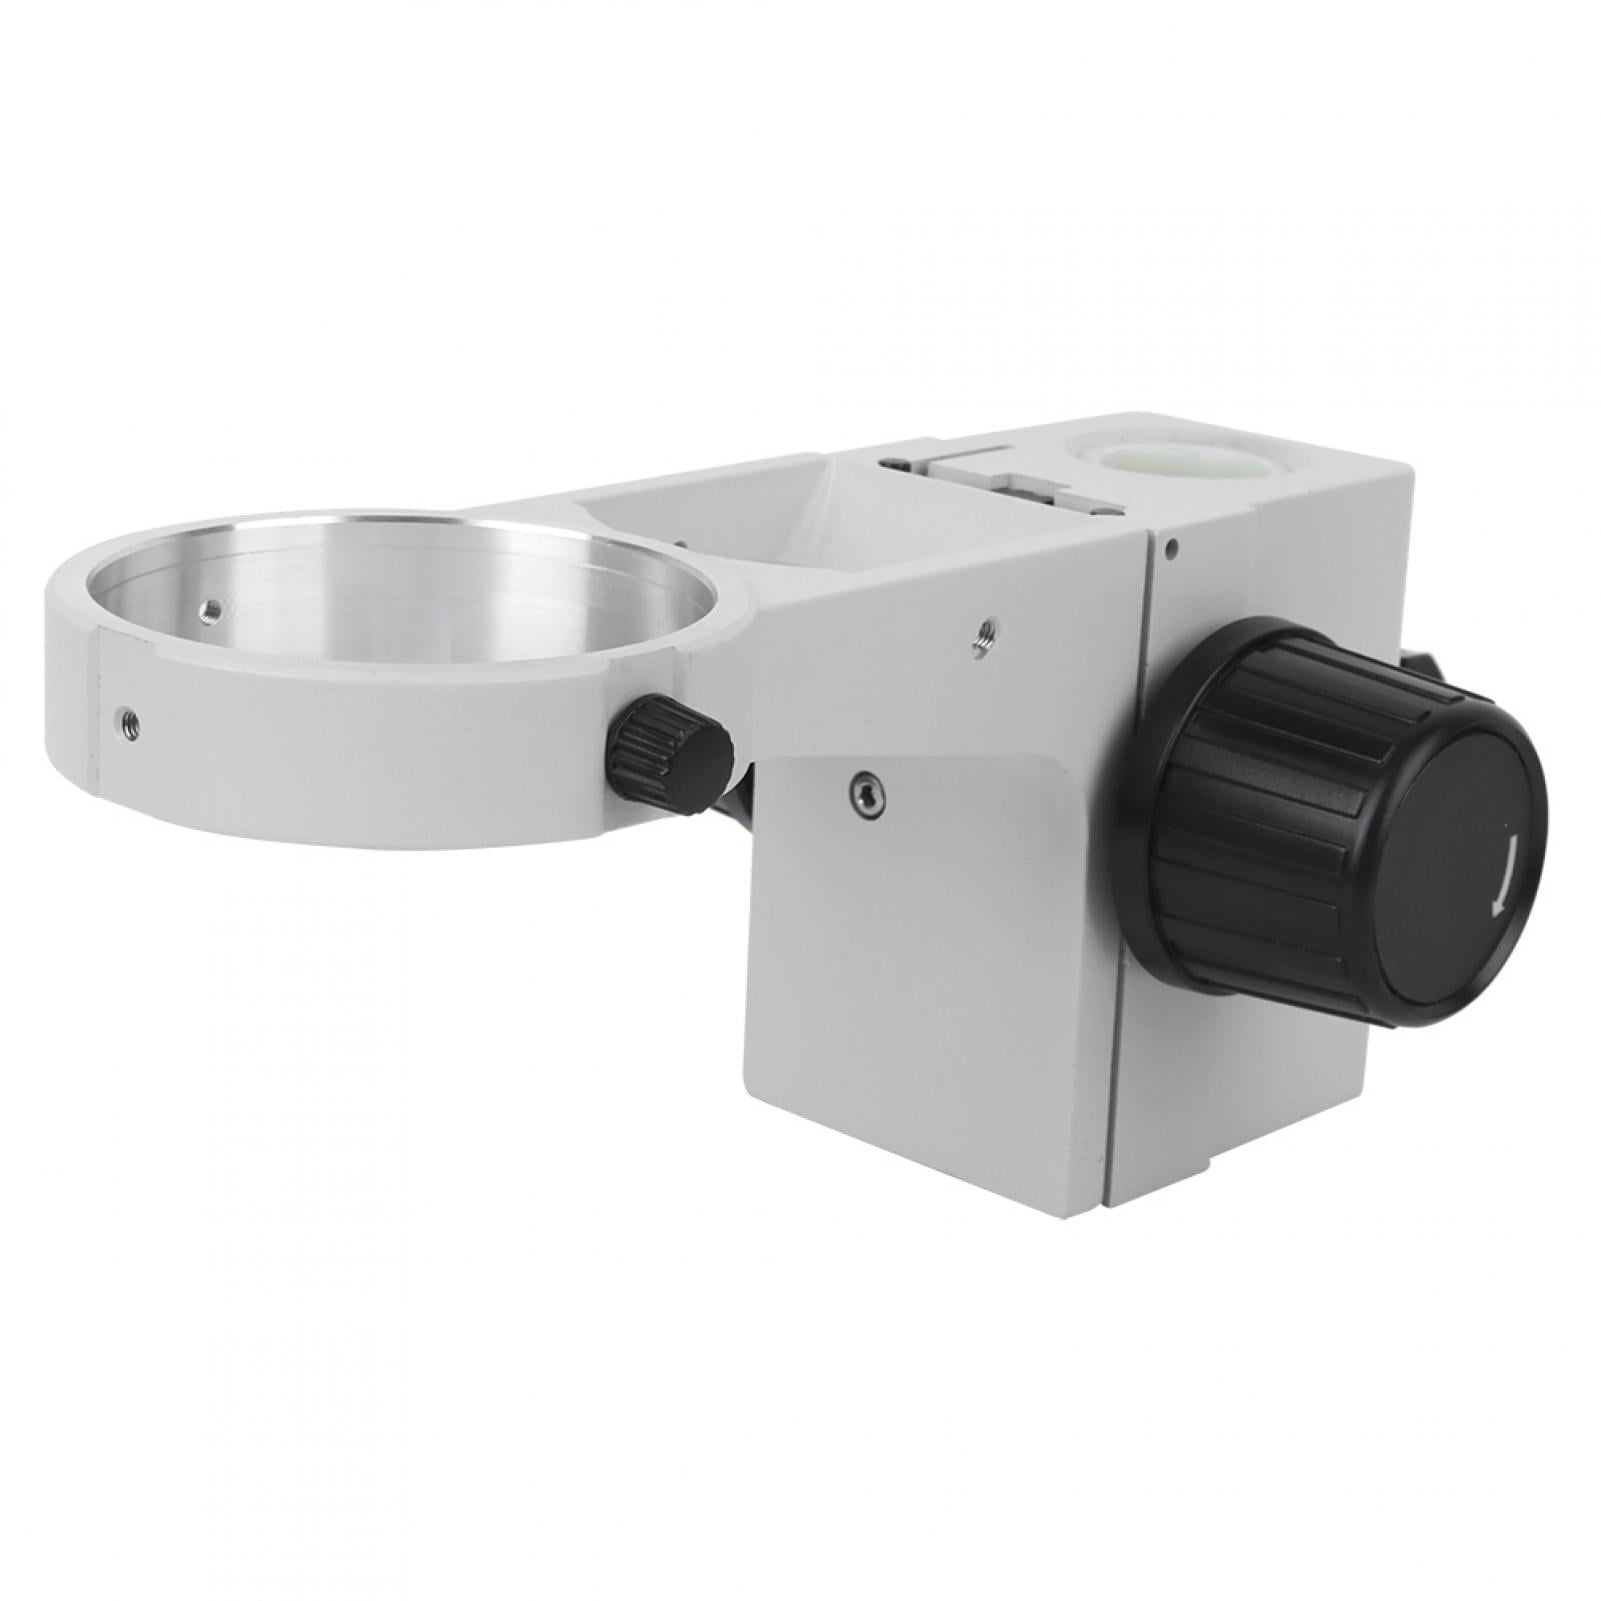 Stereo Microscope Bracket Diameter 76mm Focusing Bracket Focusing Stand Frame Stereo Microscope Accessory with Lens Body Aperture 76mm 2.99in 